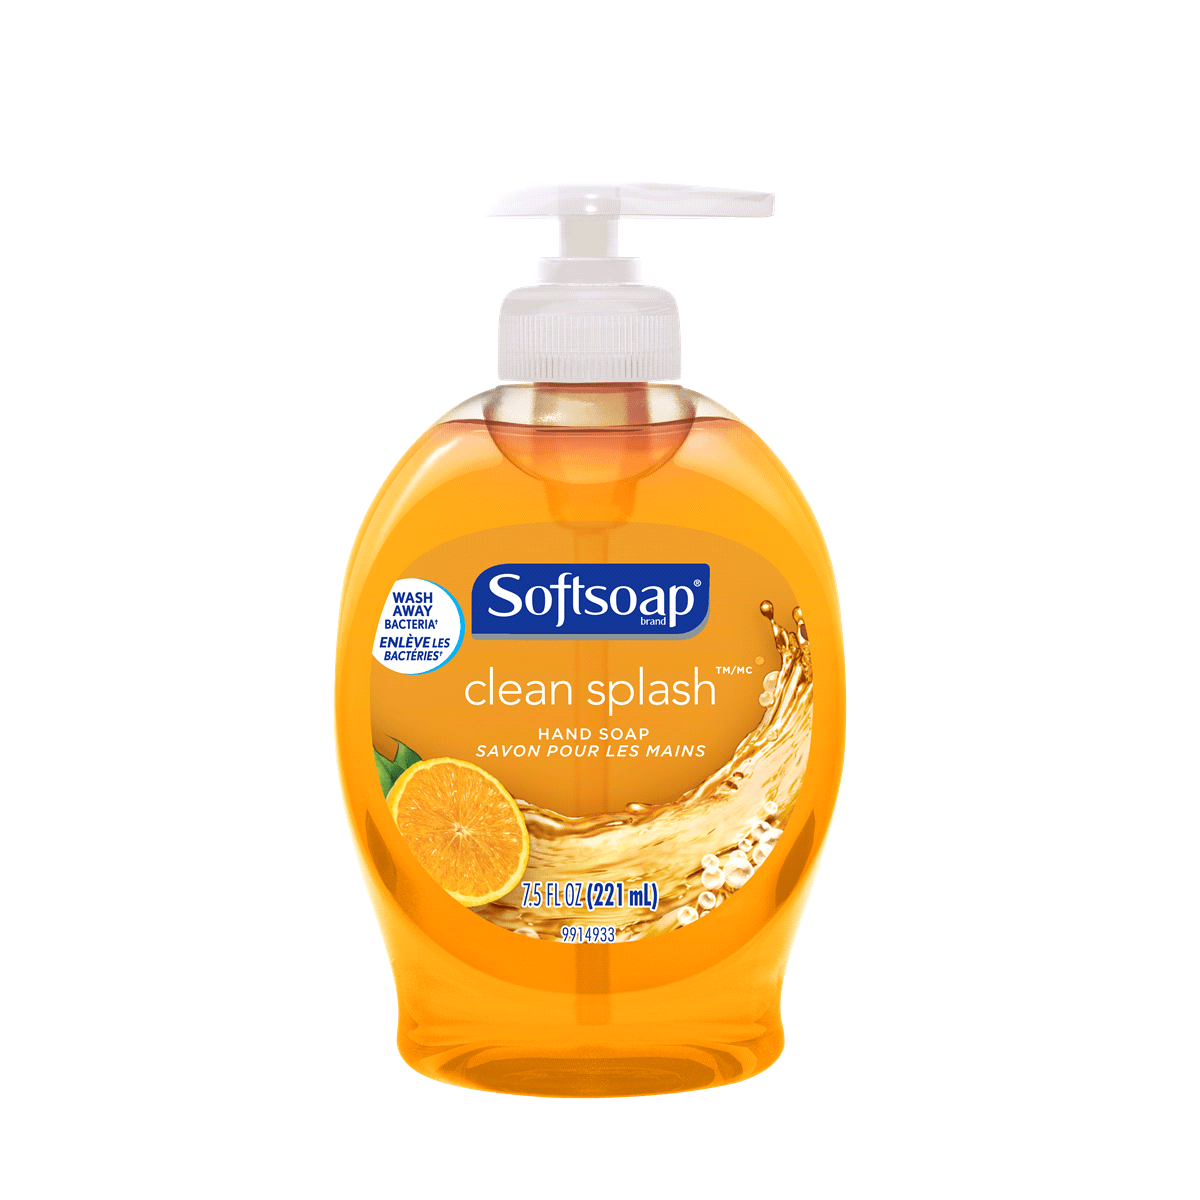 Softsoap Logo - Softsoap Liquid Hand Soap Clean Splash, 7.5 oz